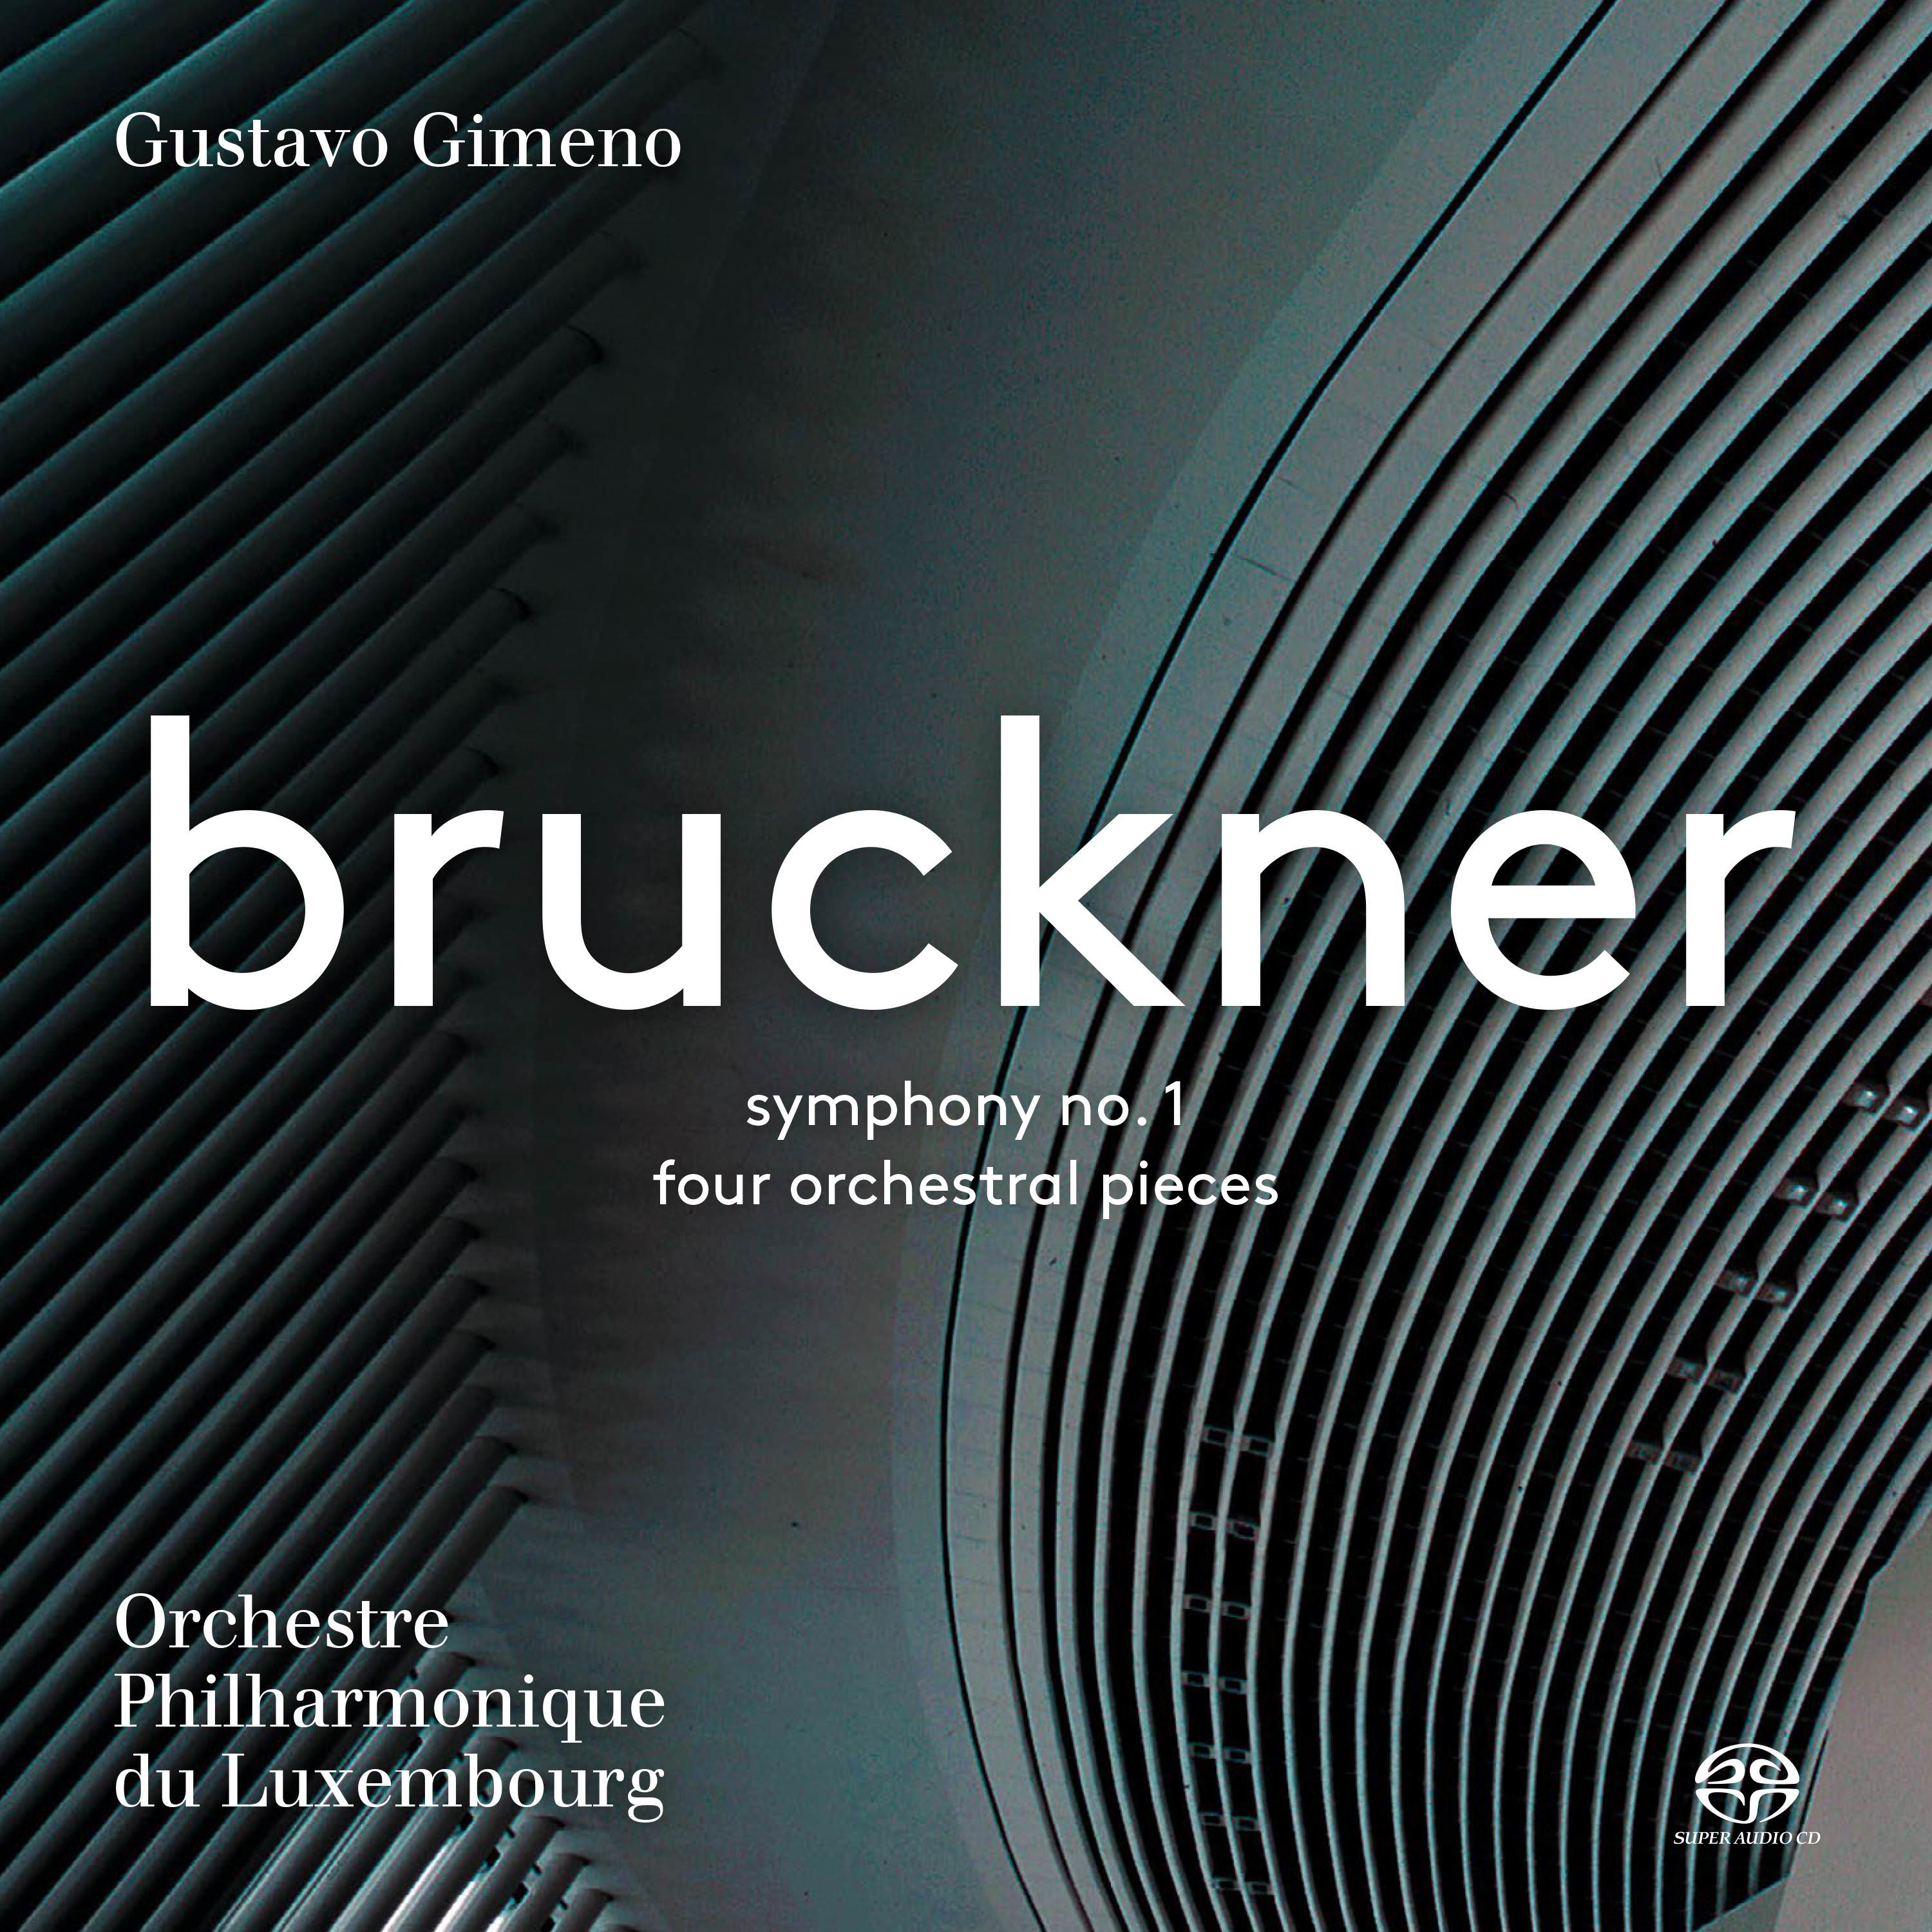 Orchestre Philharmonique du Luxembourg, Gustavo Gimeno – Bruckner: Symphony No. 1 (2017) [nativeDSDmusic DSF DSD64/2.82MHz]